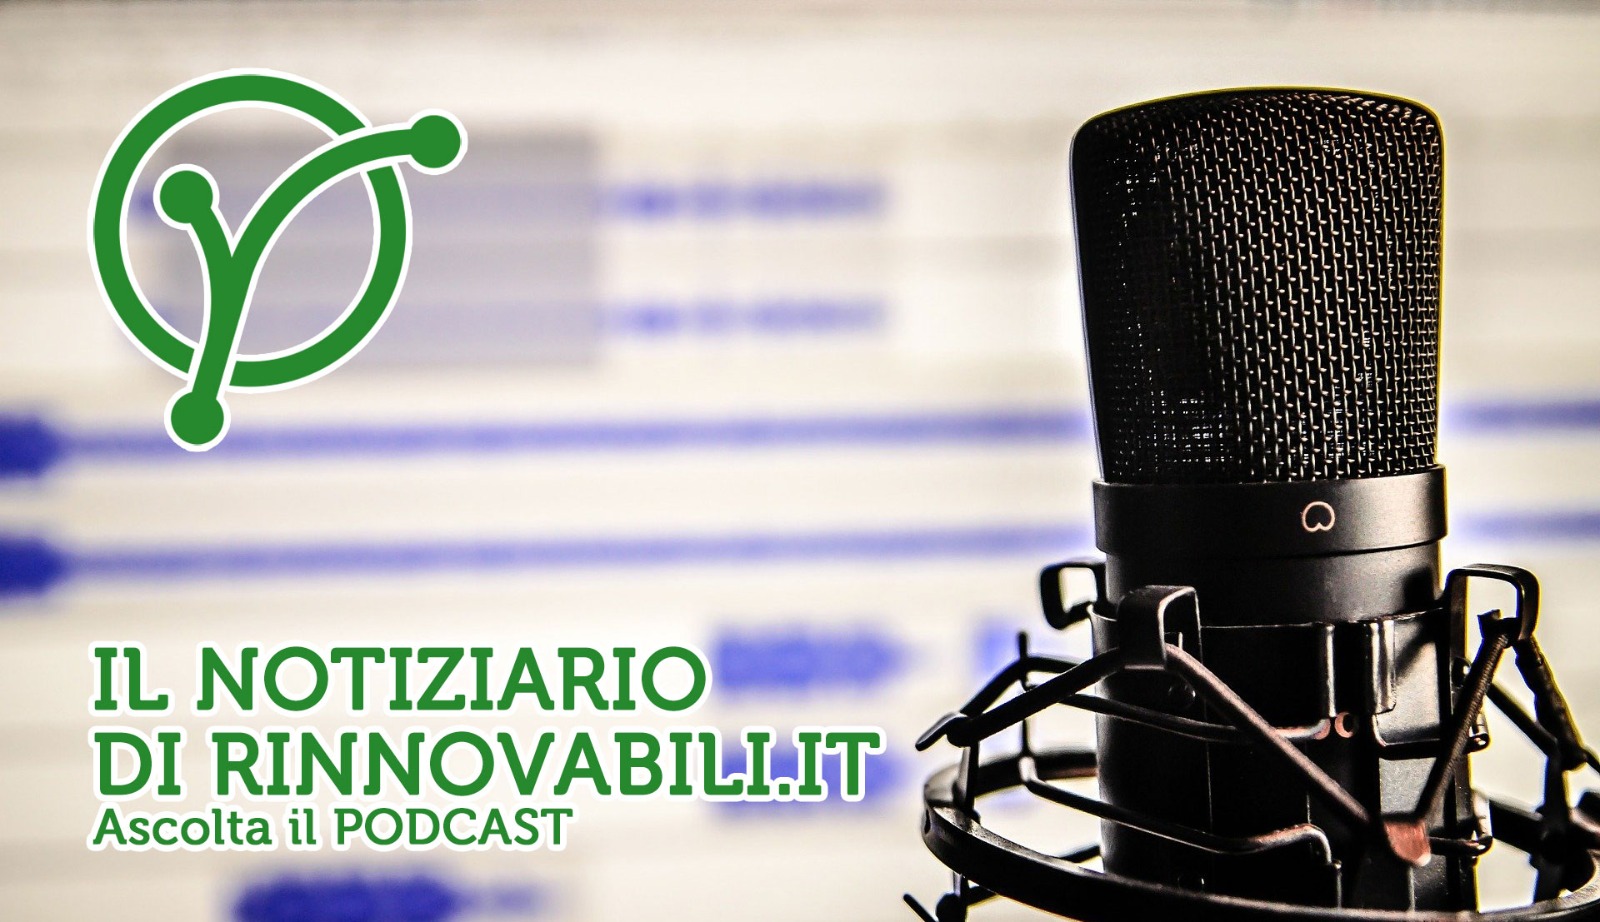 Rinnovabili • podcast di rinnovabili.it